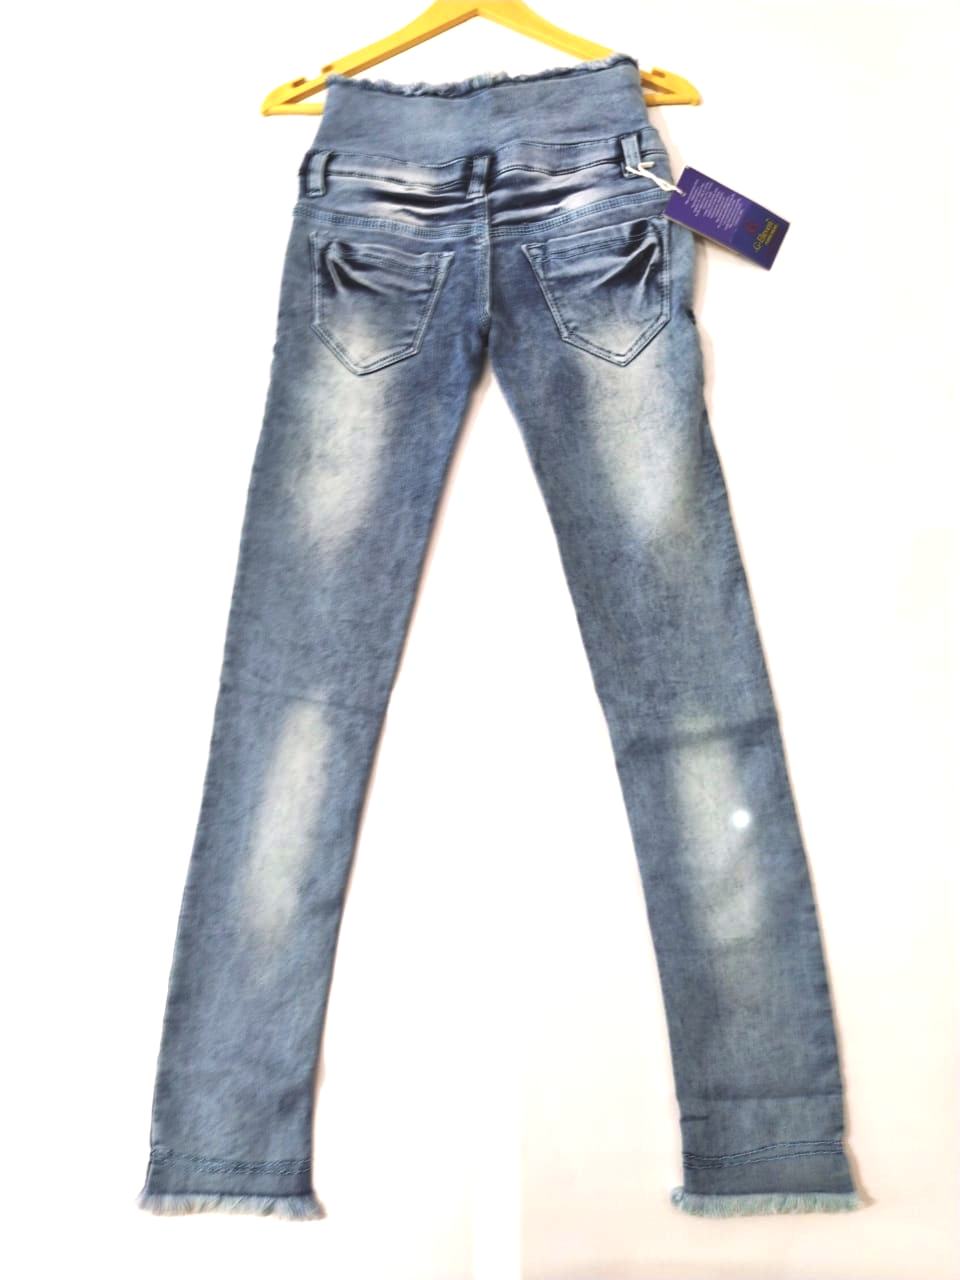 G - Eleven 4 Button Broad Belt Slim fit Stretchable Jeans